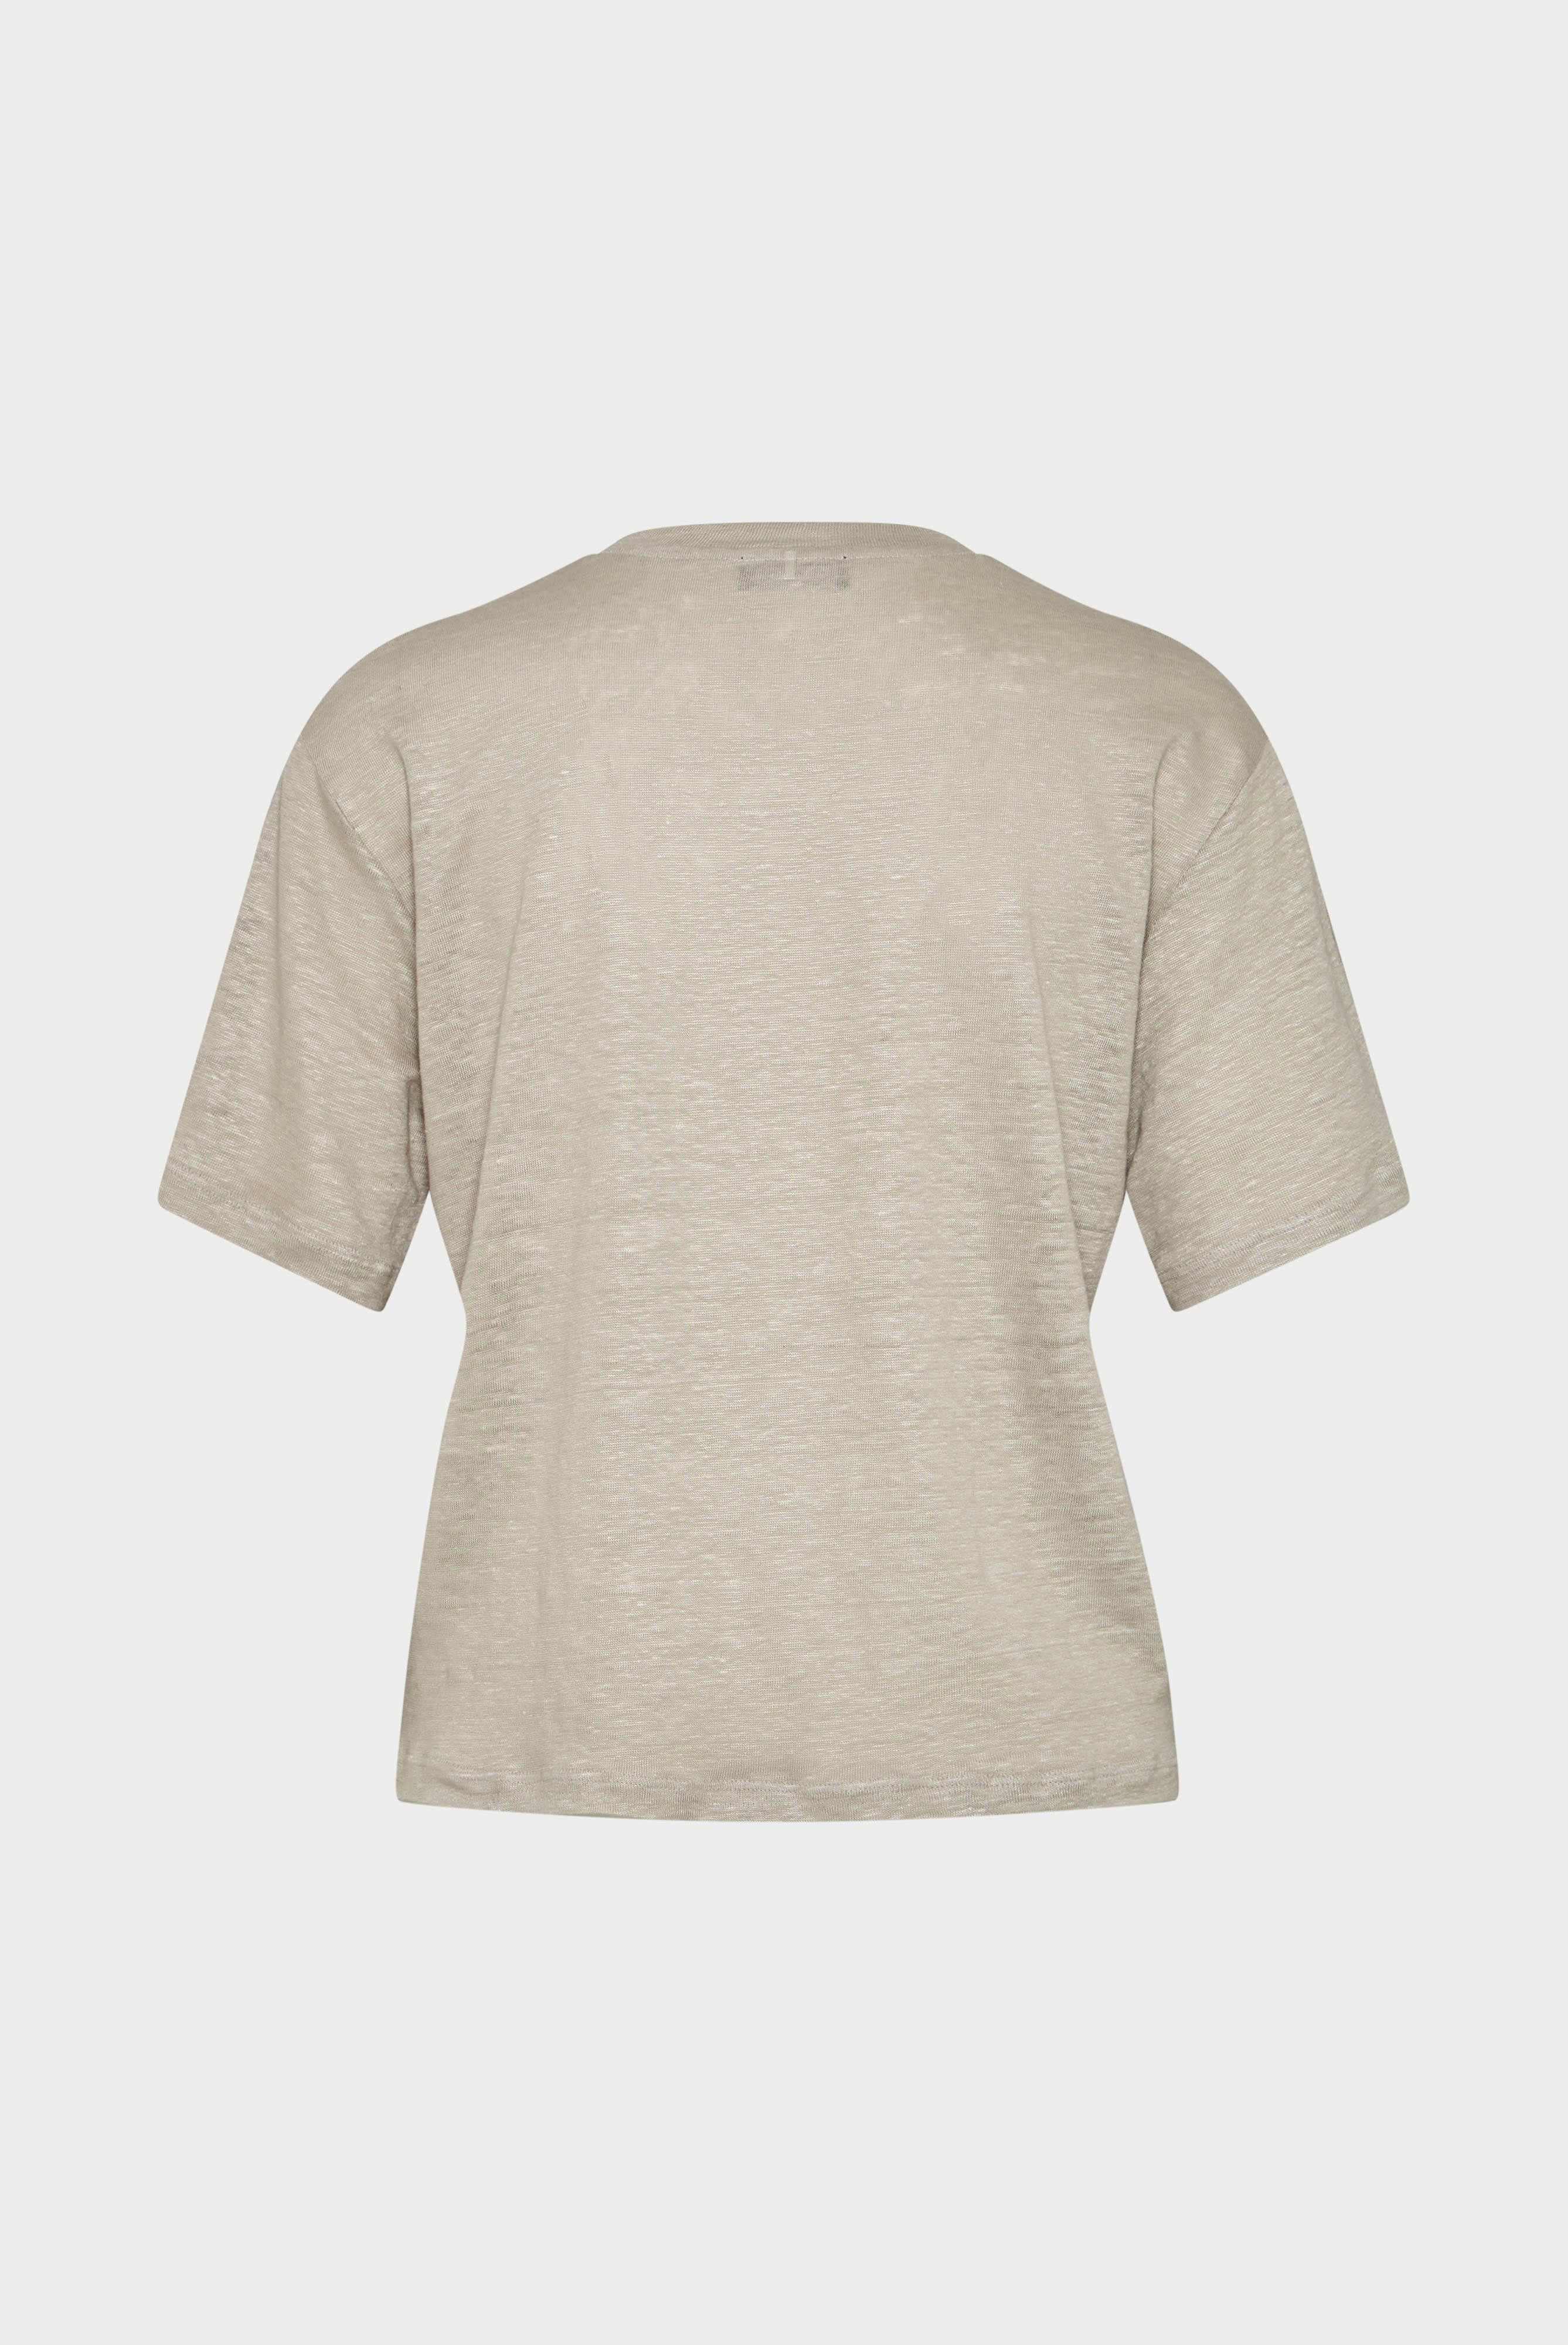 Tops & T-Shirts+Linen Shirt Jersey Boxy Fit+05.2912.Q8.180125.140.32